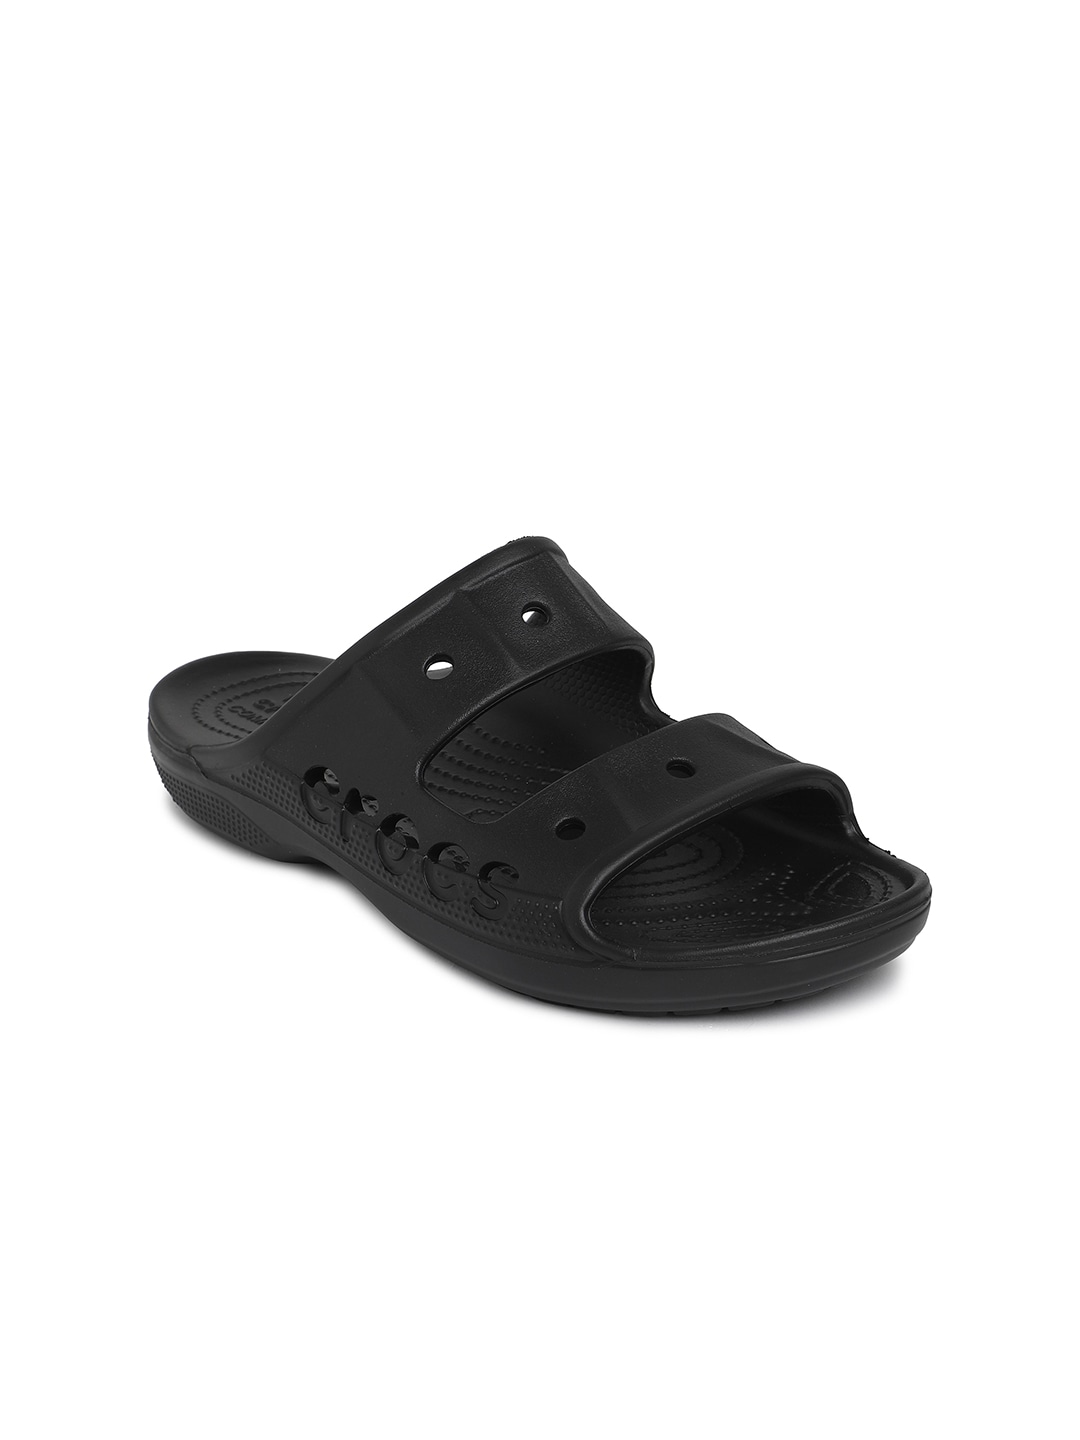 Crocs Croslite Thong Flip-Flops